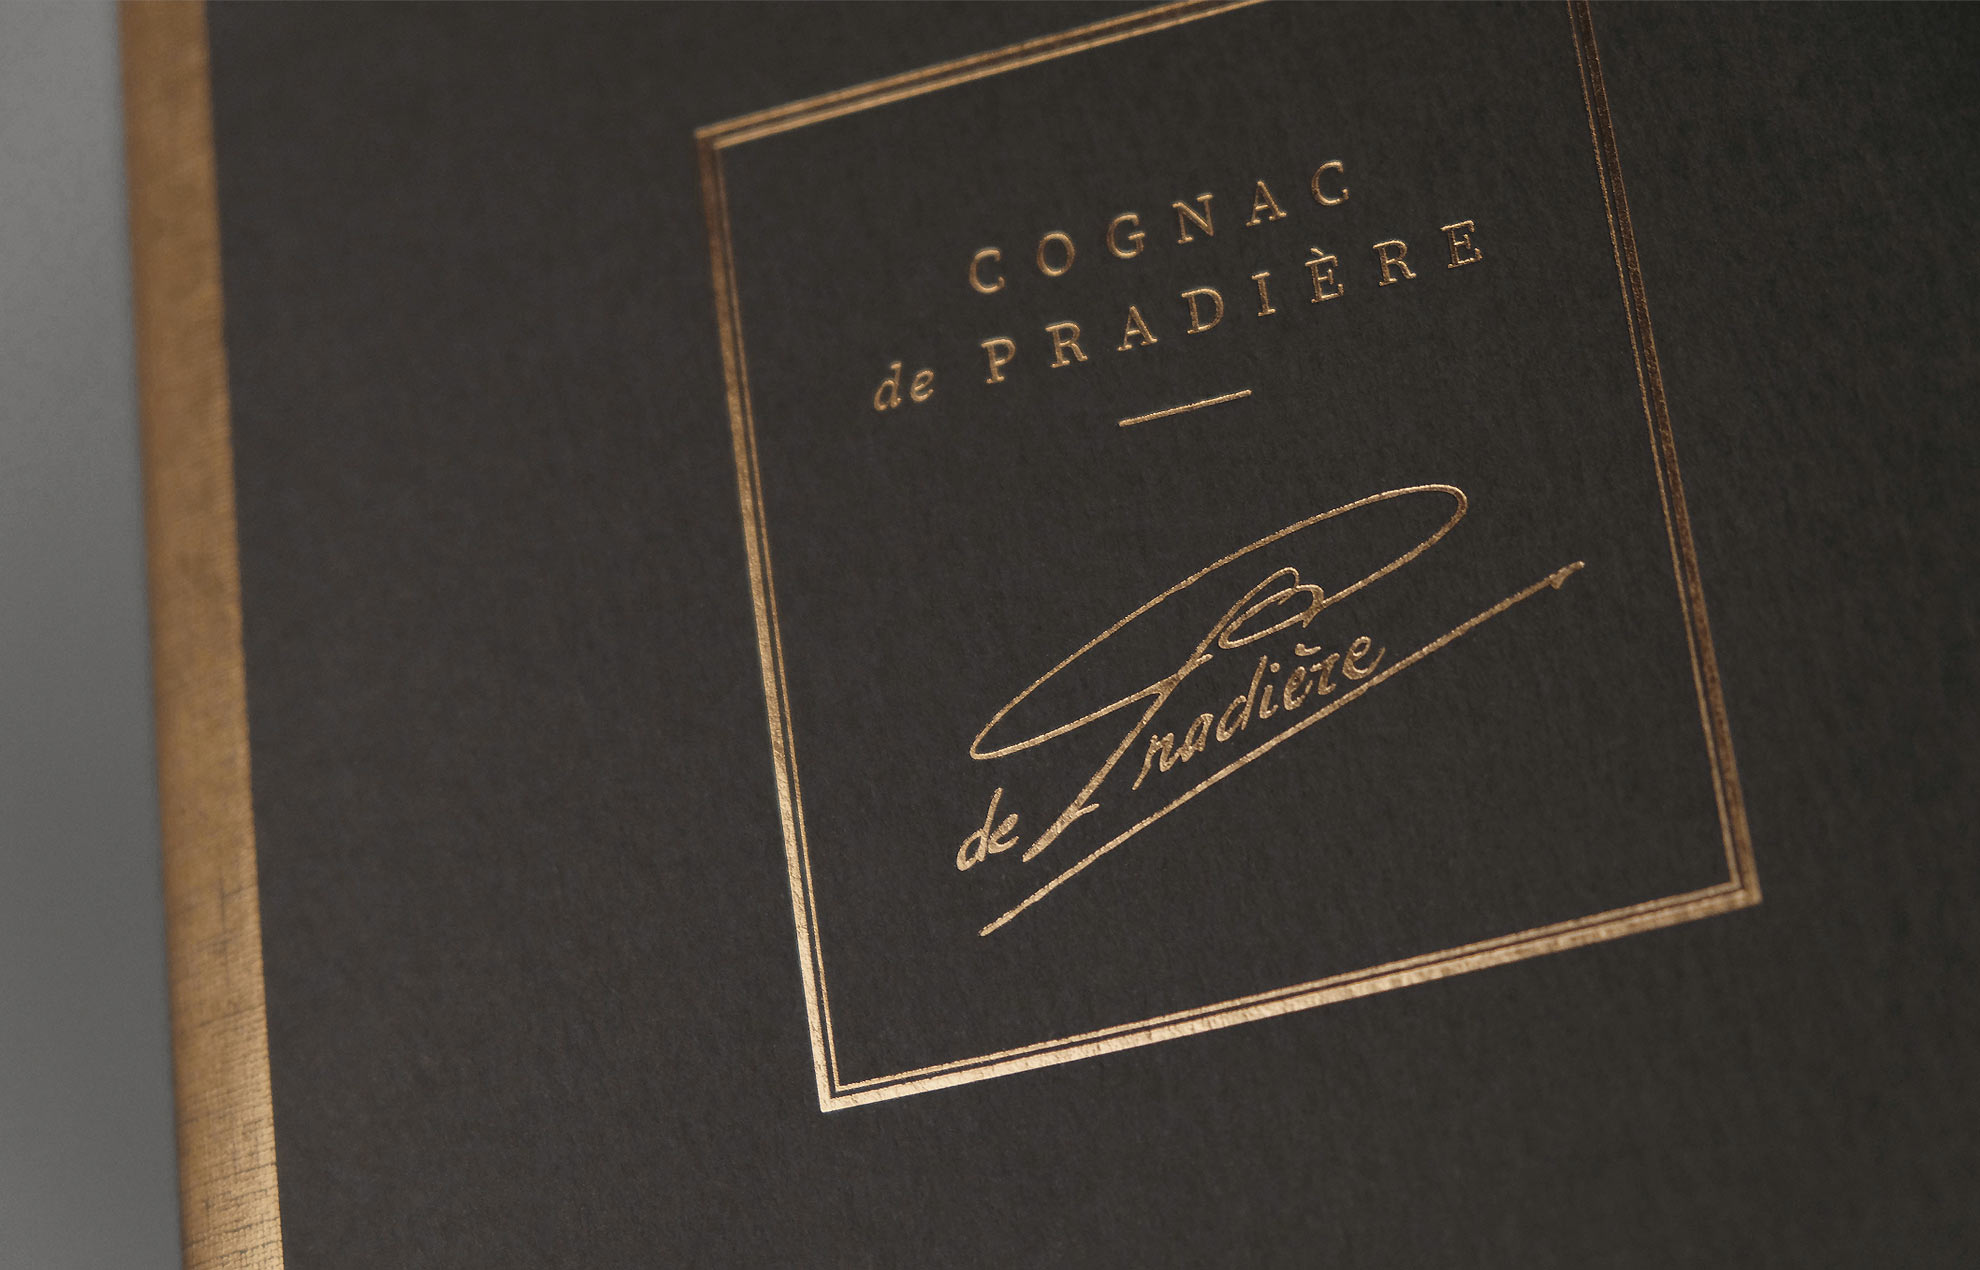 Brochure Cognac Pradière